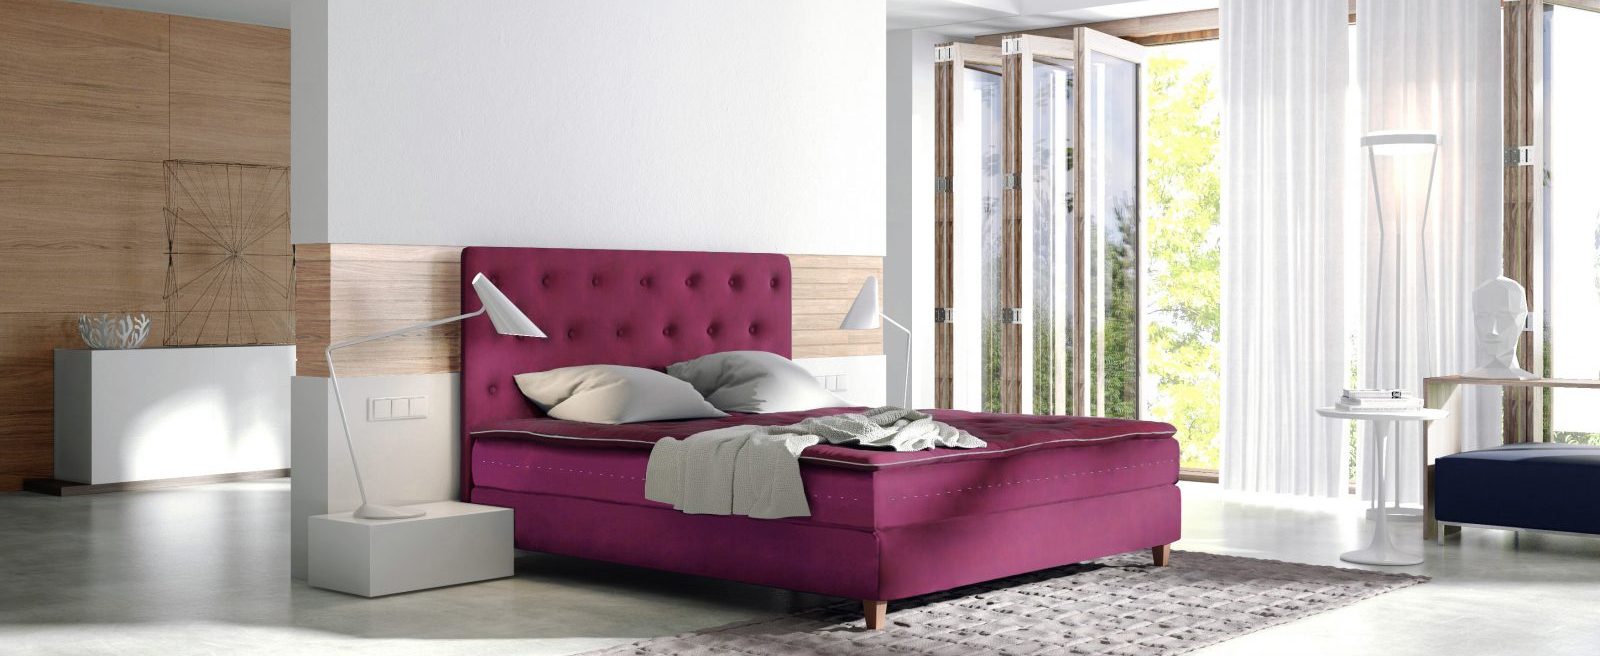 pauly-beds-continental-luxury-mattress-venus